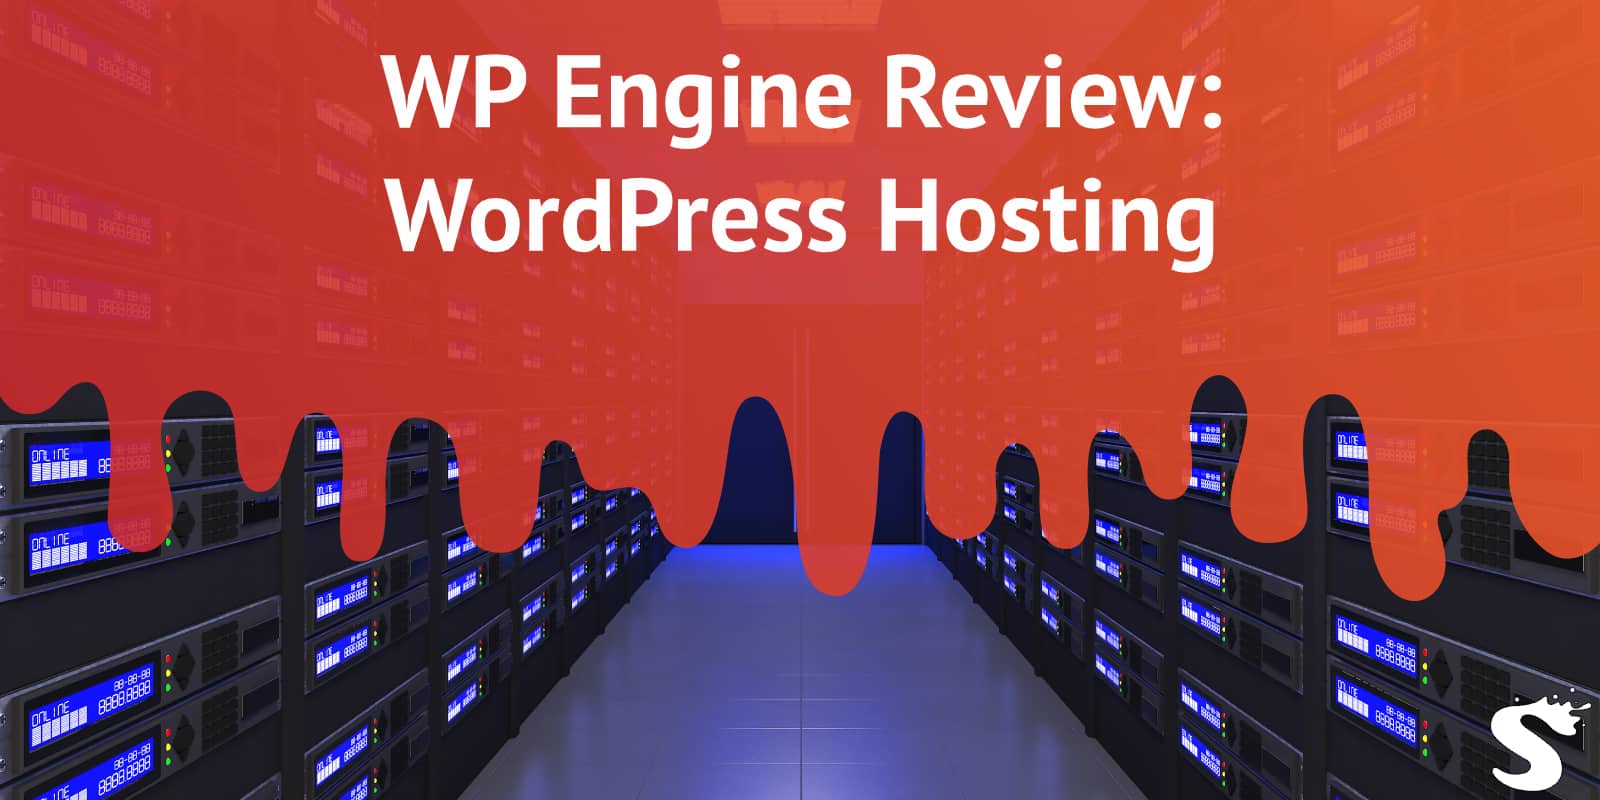 WP Engine Review: WordPress Hosting